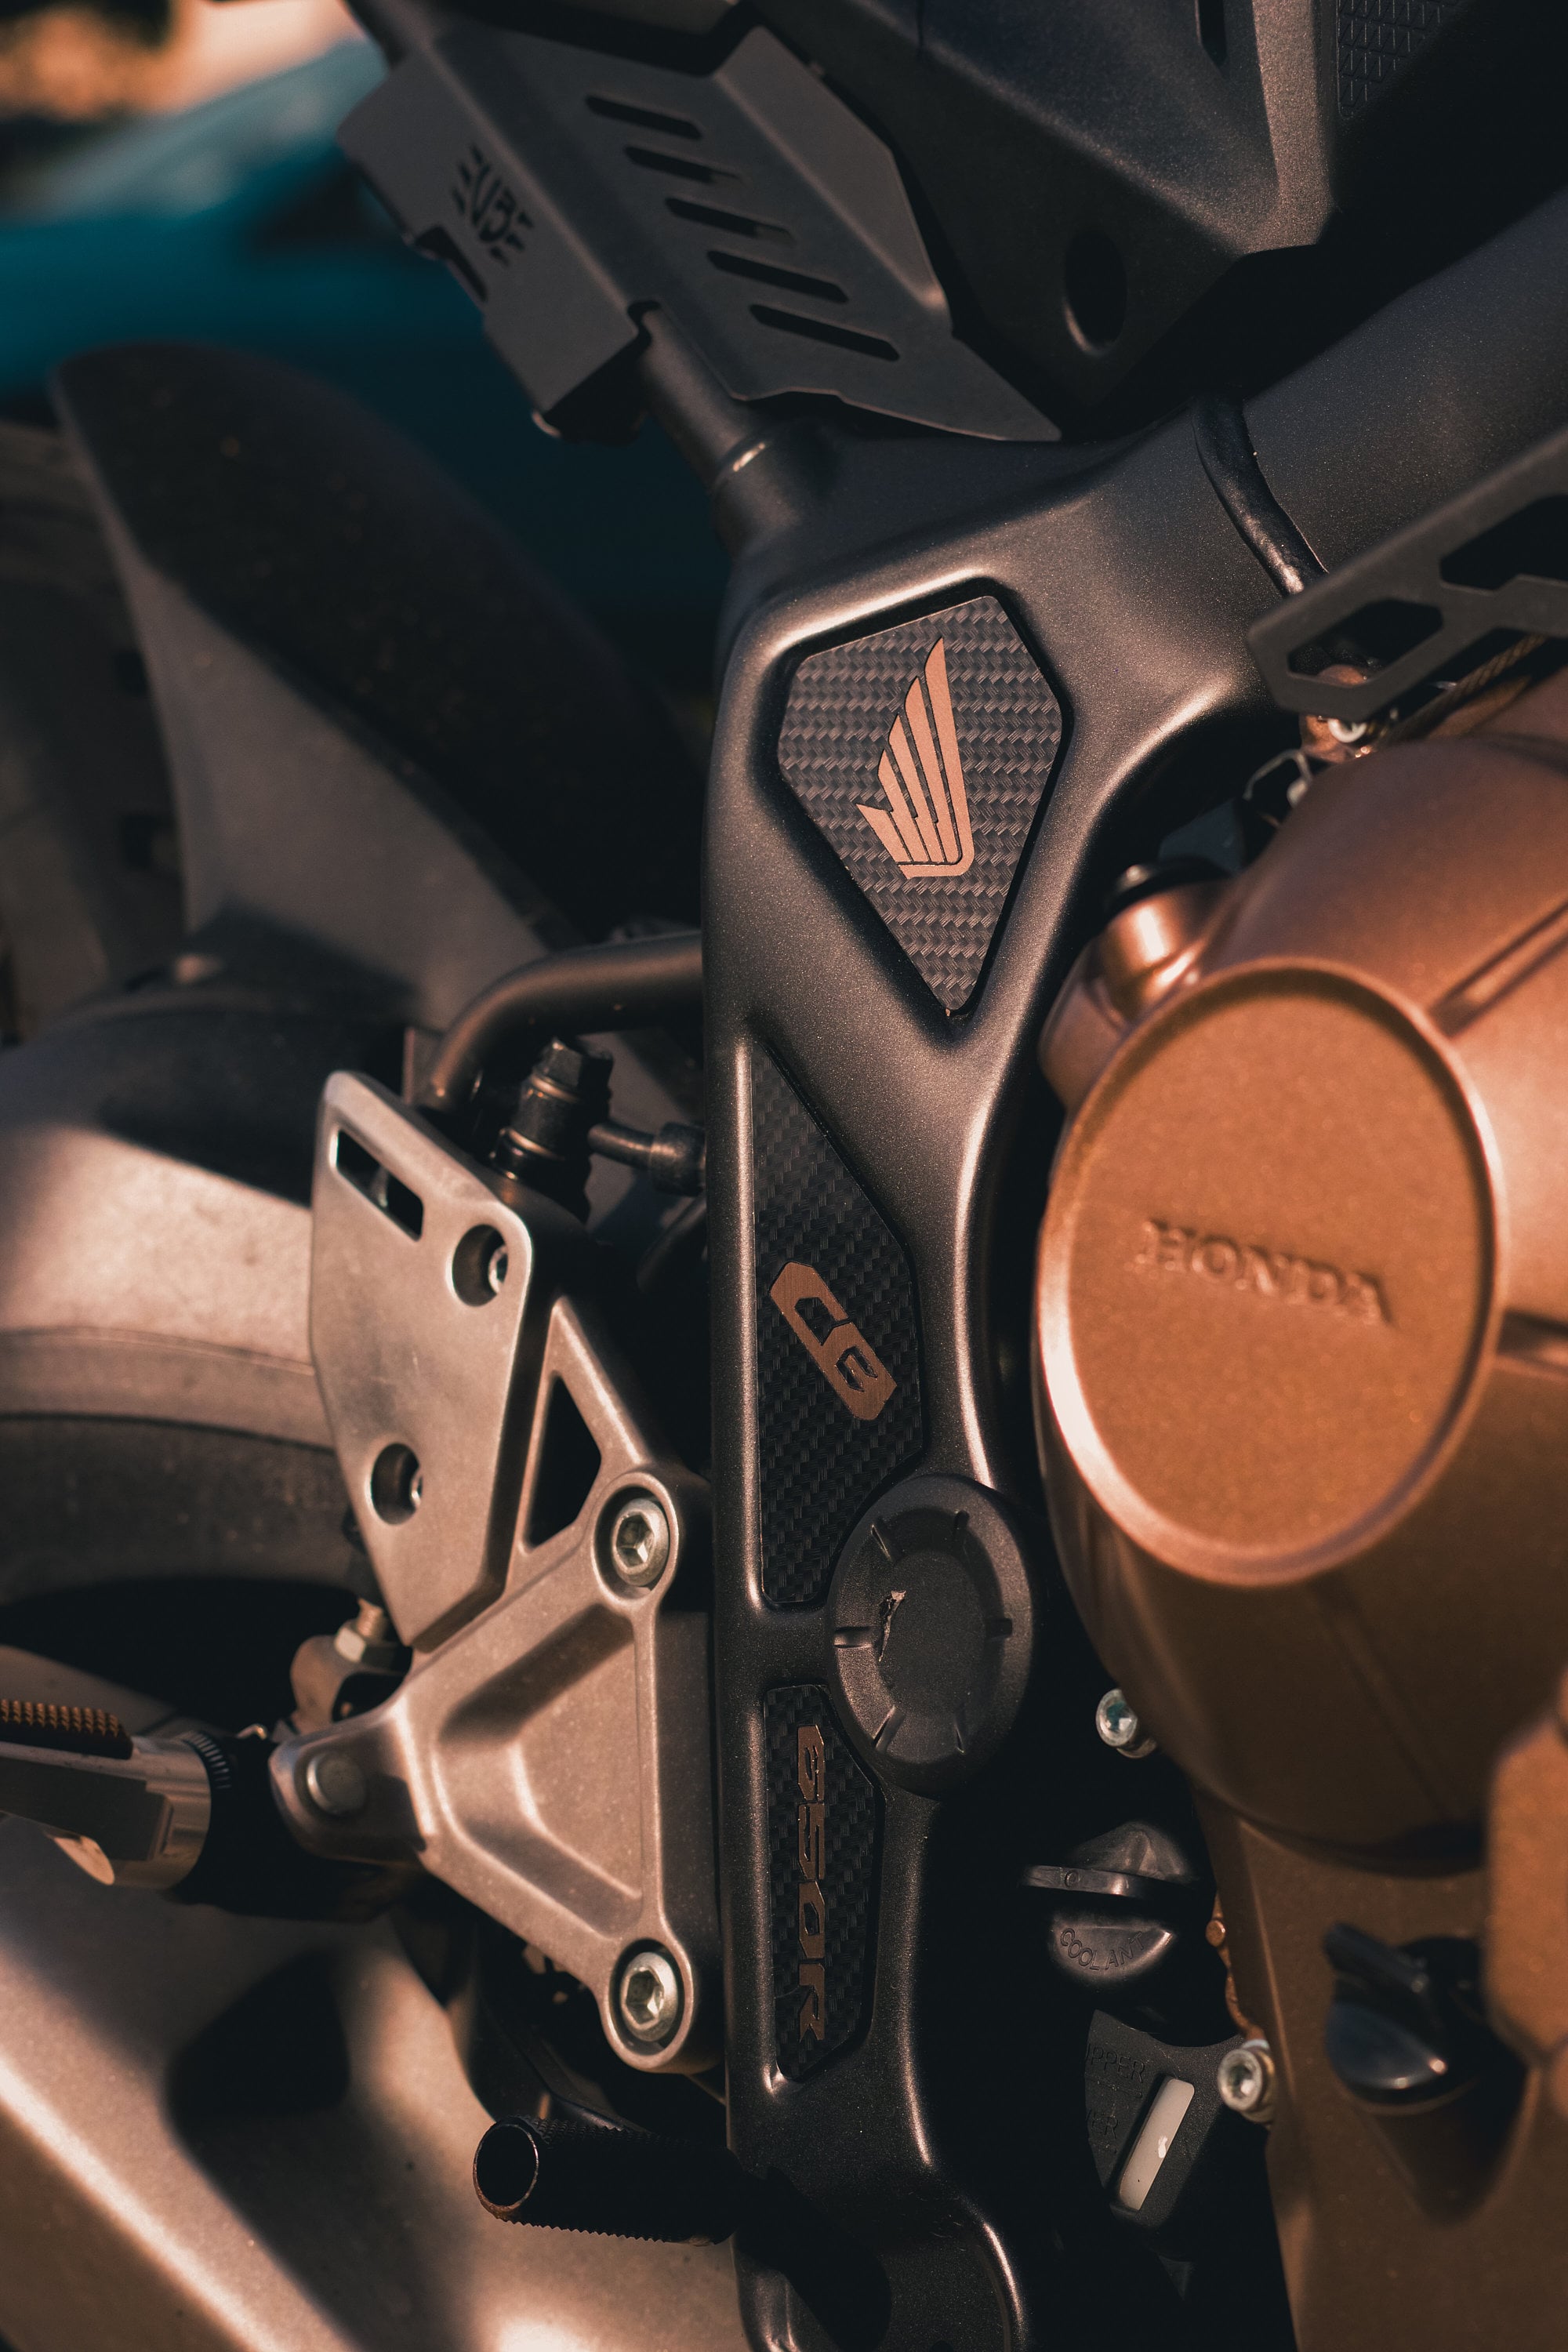 Honda CB650R 2024 Standard Specs & Price in Malaysia